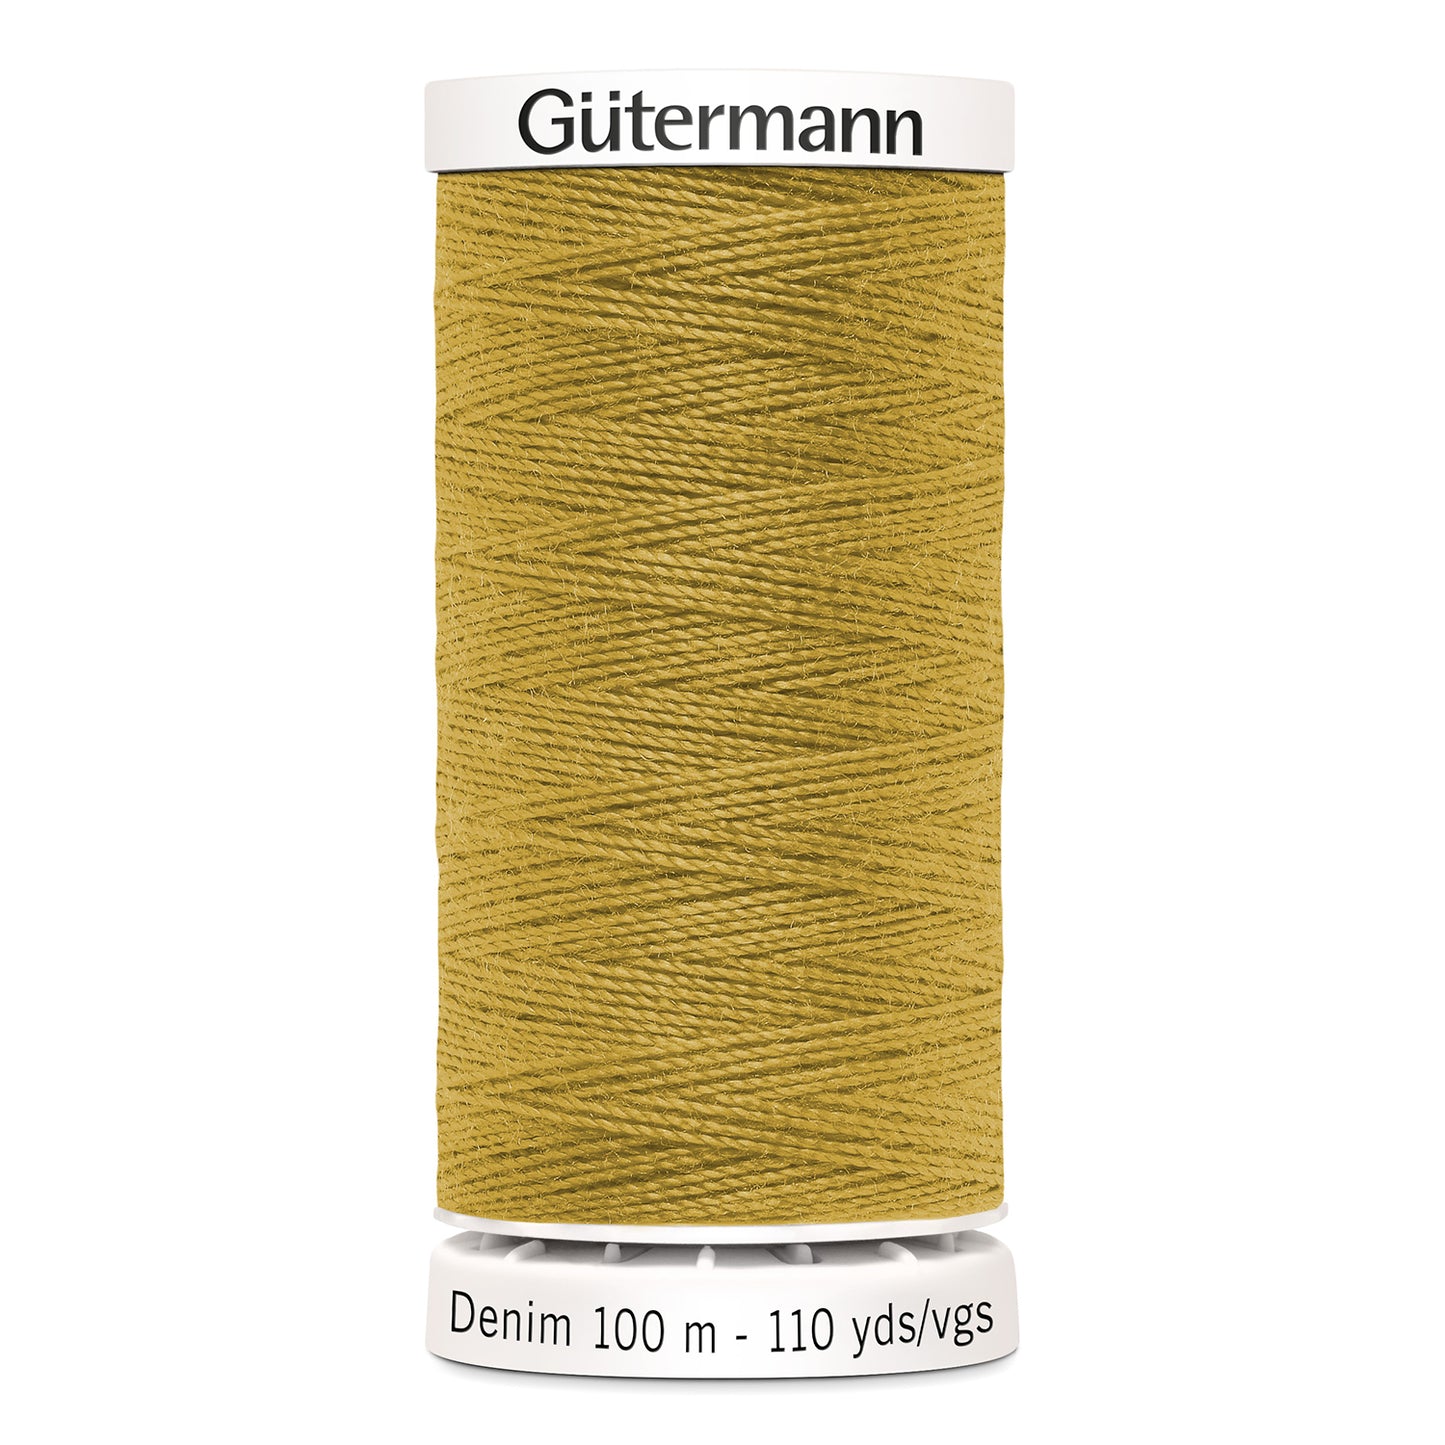 Jeans thread Denim 100m from Gütermann